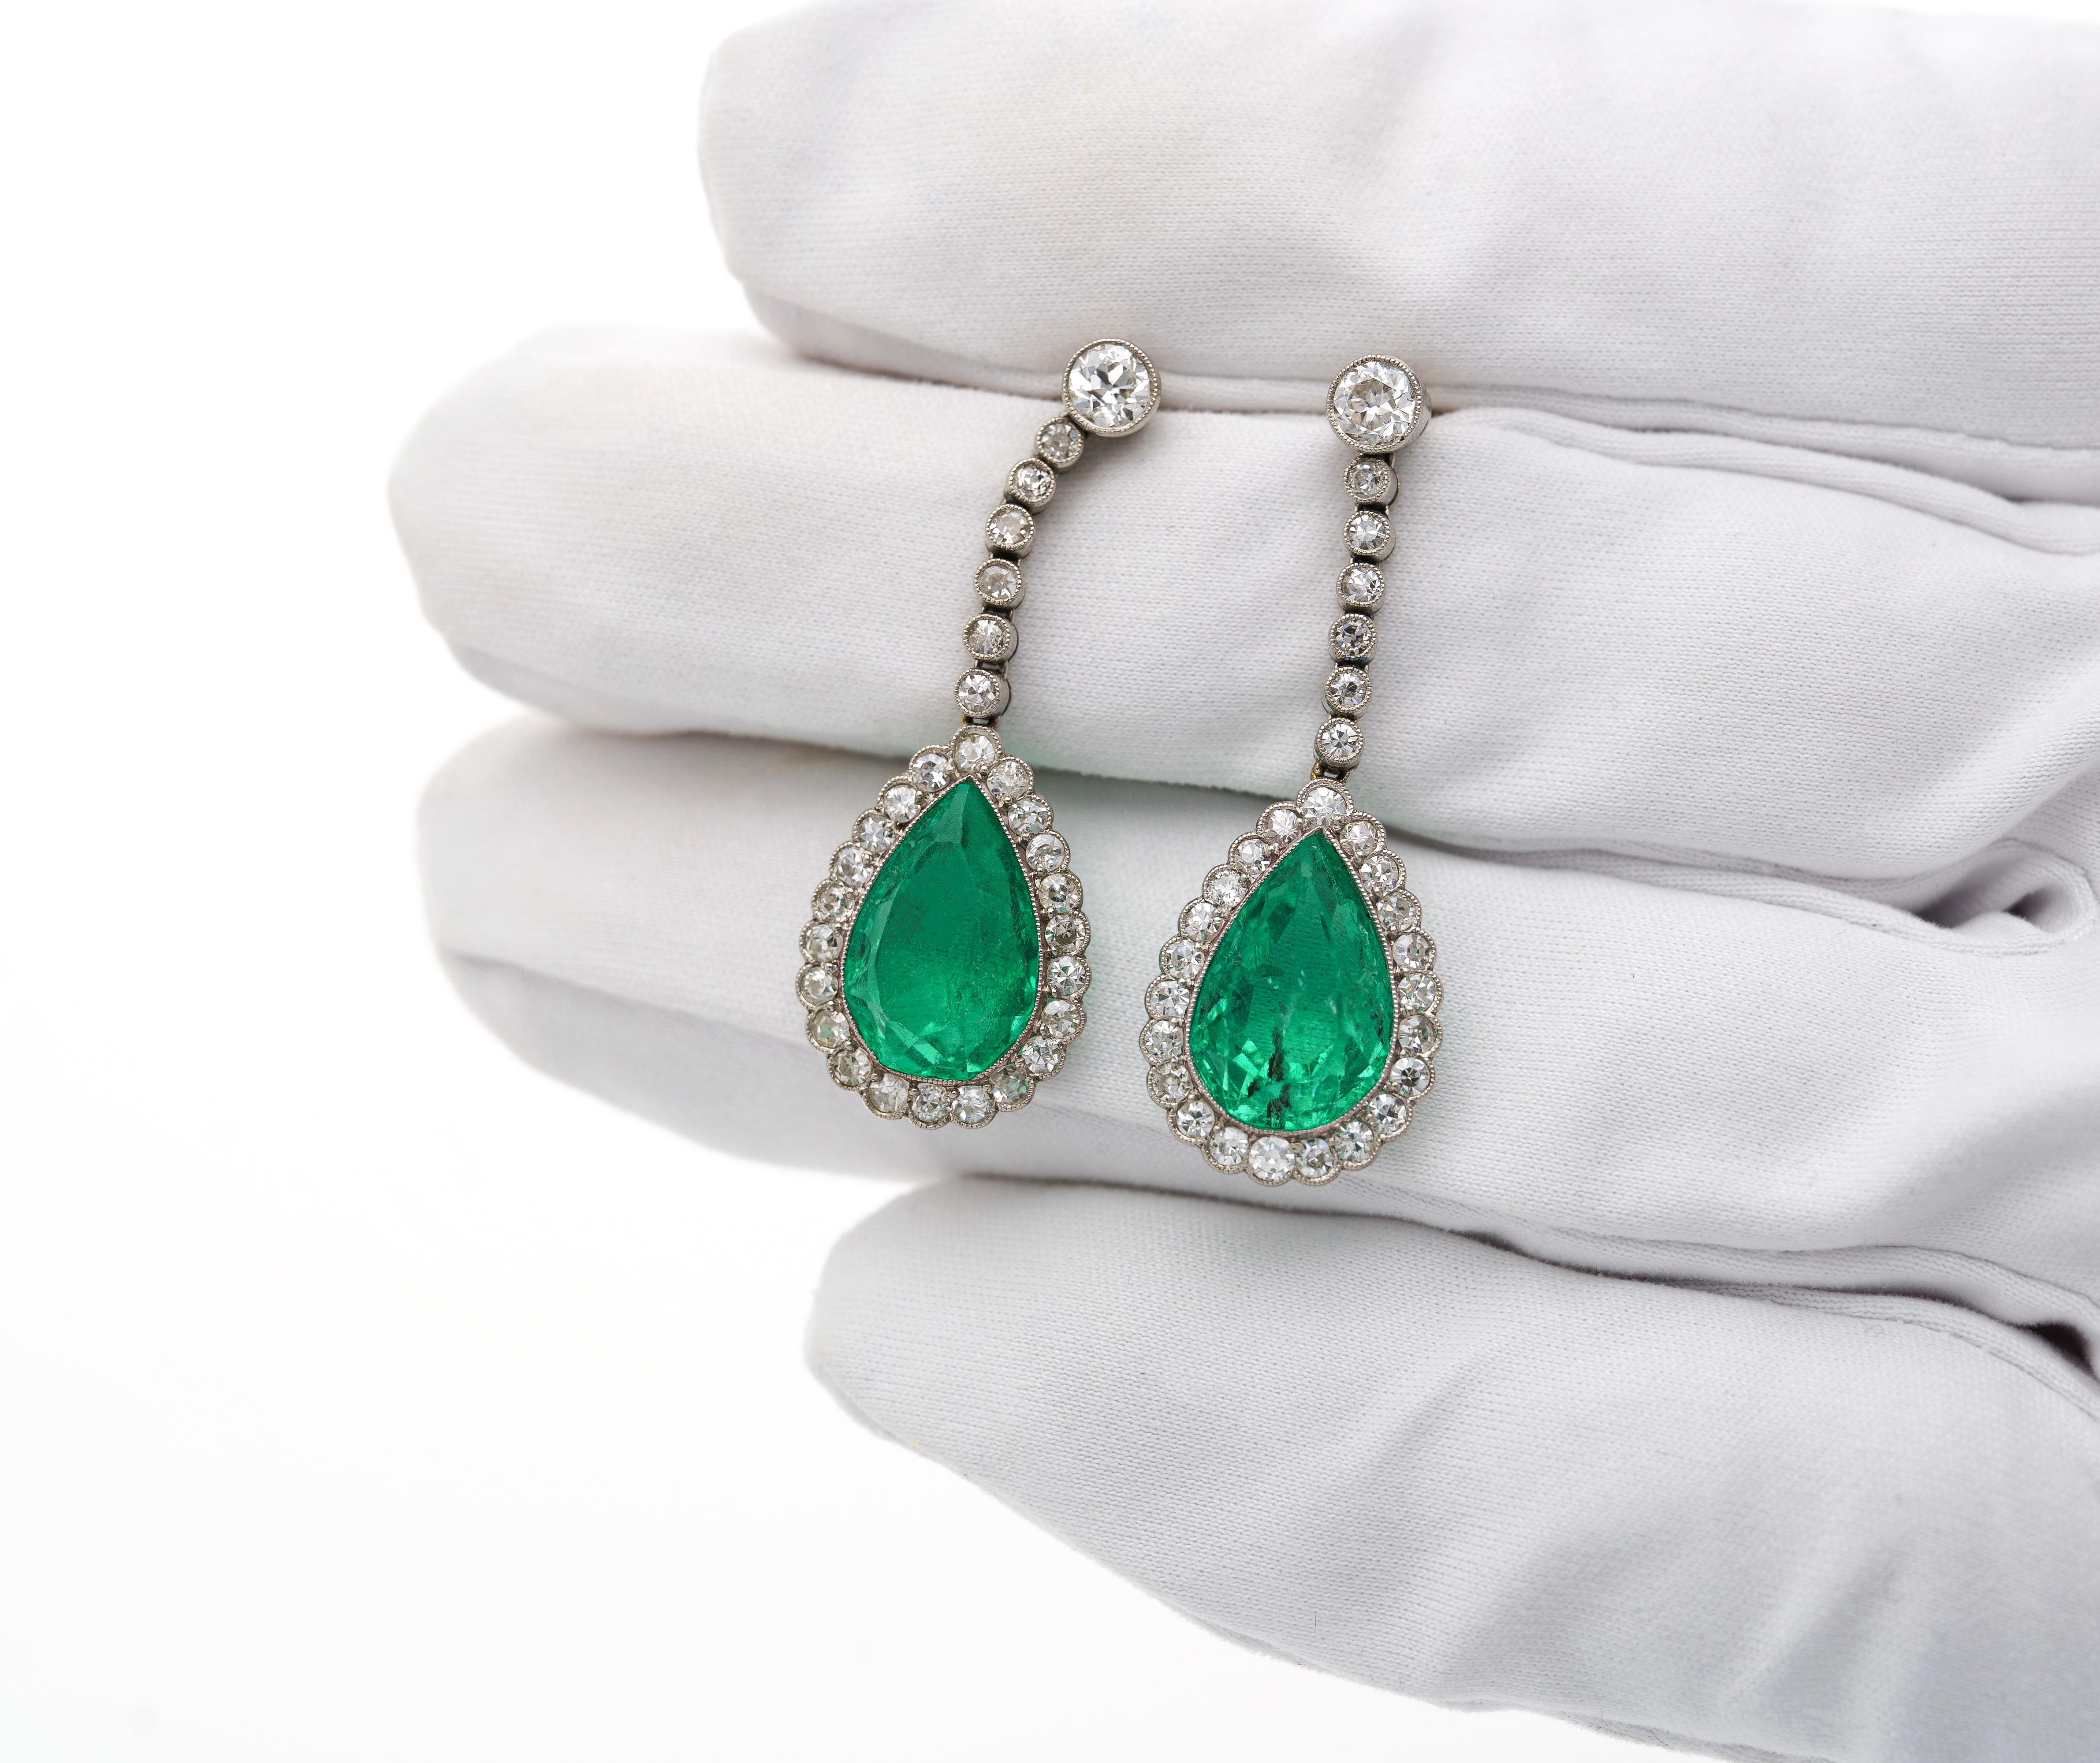 Vintage AGL Certified 10 Carat Colombian Emerald Drop Earrings in Platinum For Sale 4